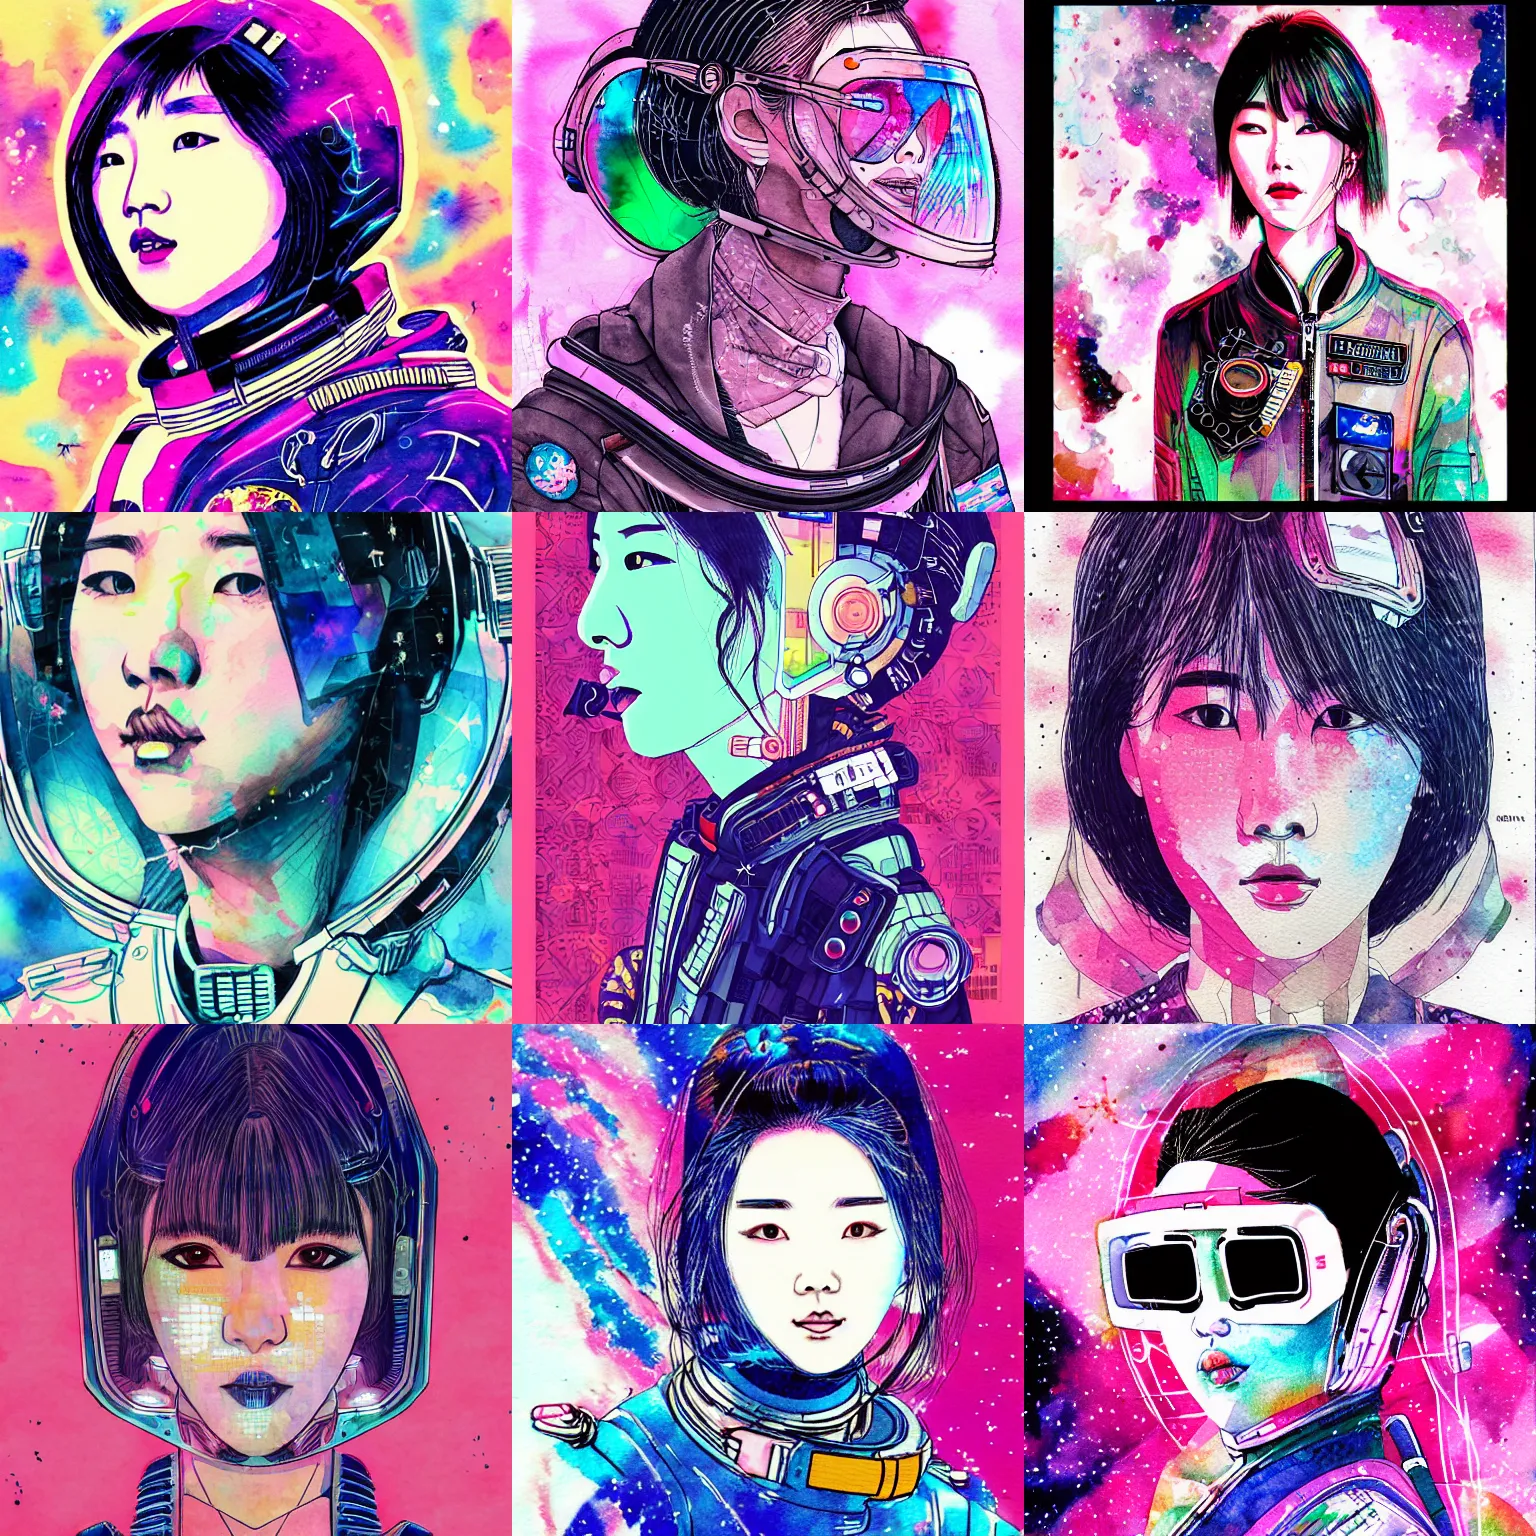 Prompt: korean women's fashion astronaut, intricate watercolor cyberpunk vaporwave portrait by tim doyle